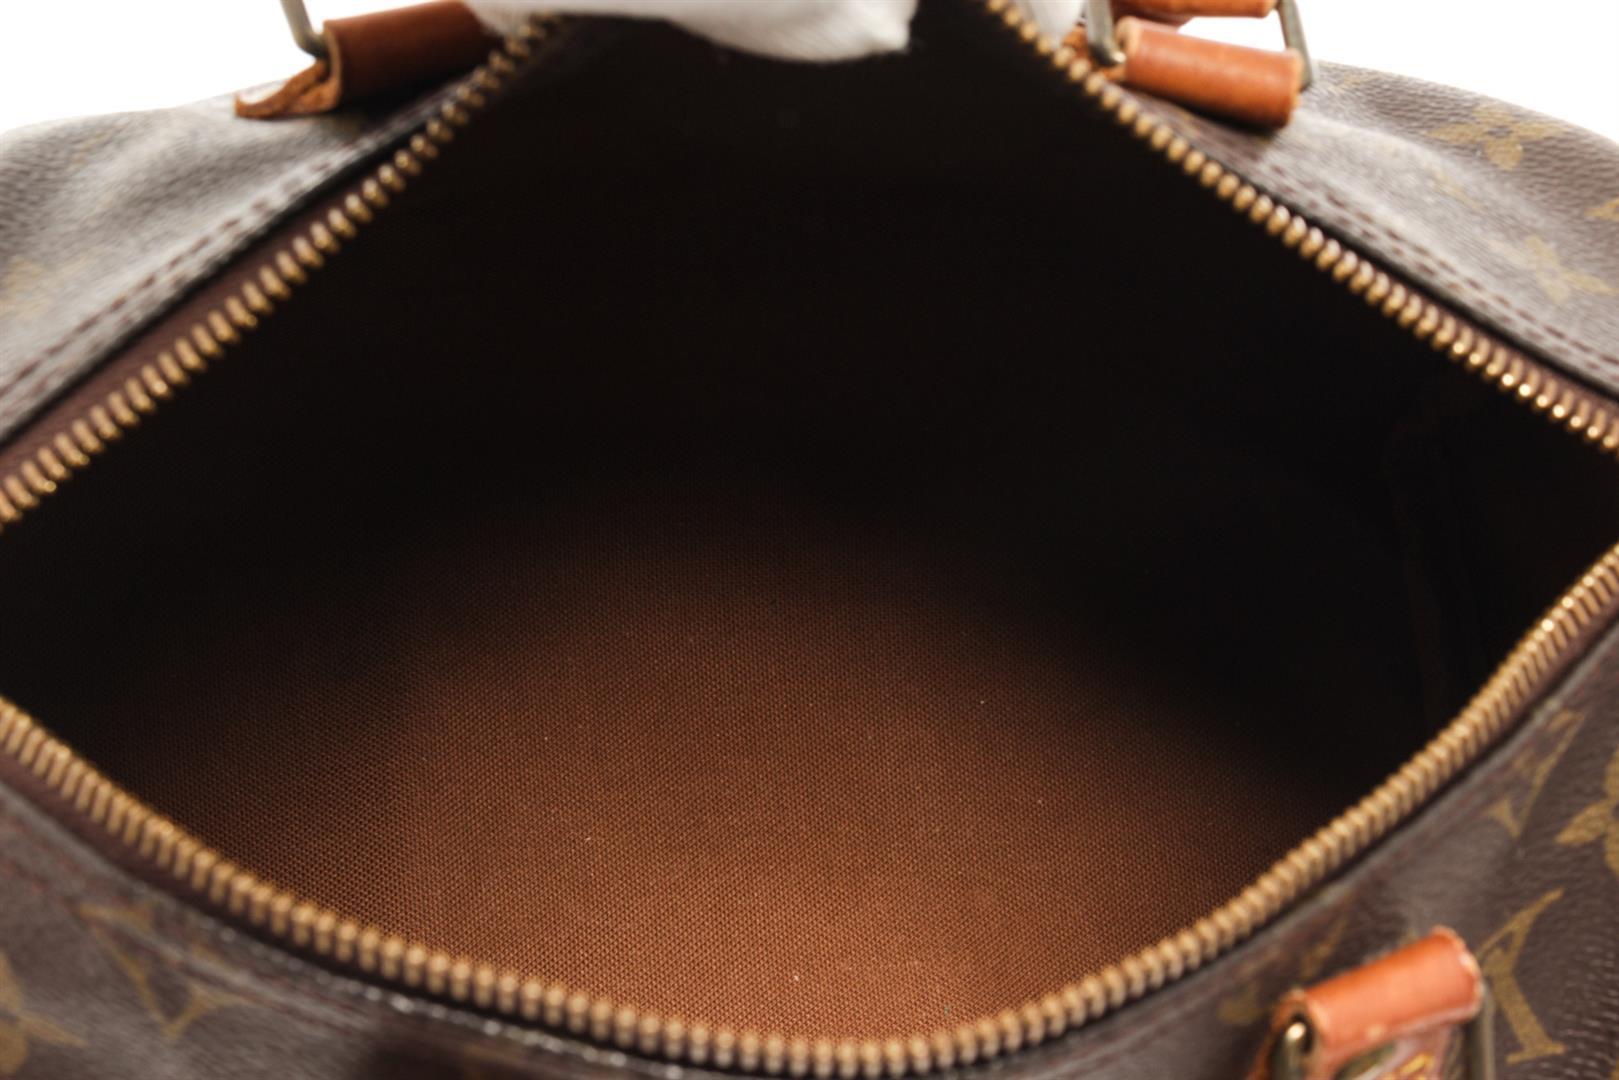 Louis Vuitton Brown Monogram Canvas Speedy 25 Cm Handbag